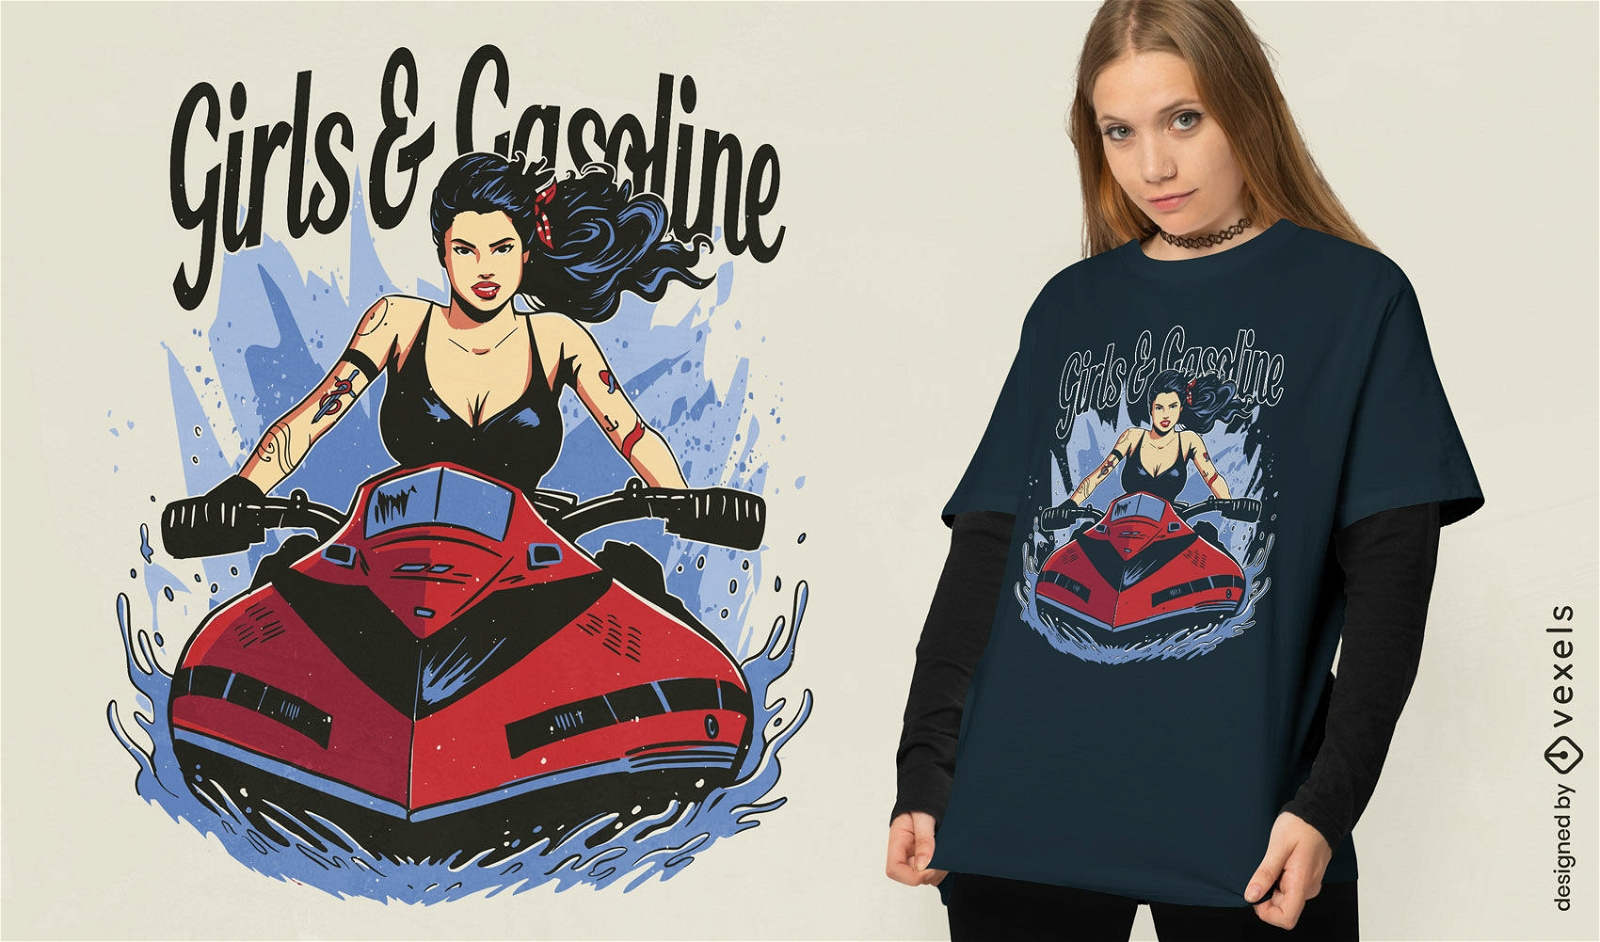 Girl riding jetski t-shirt design